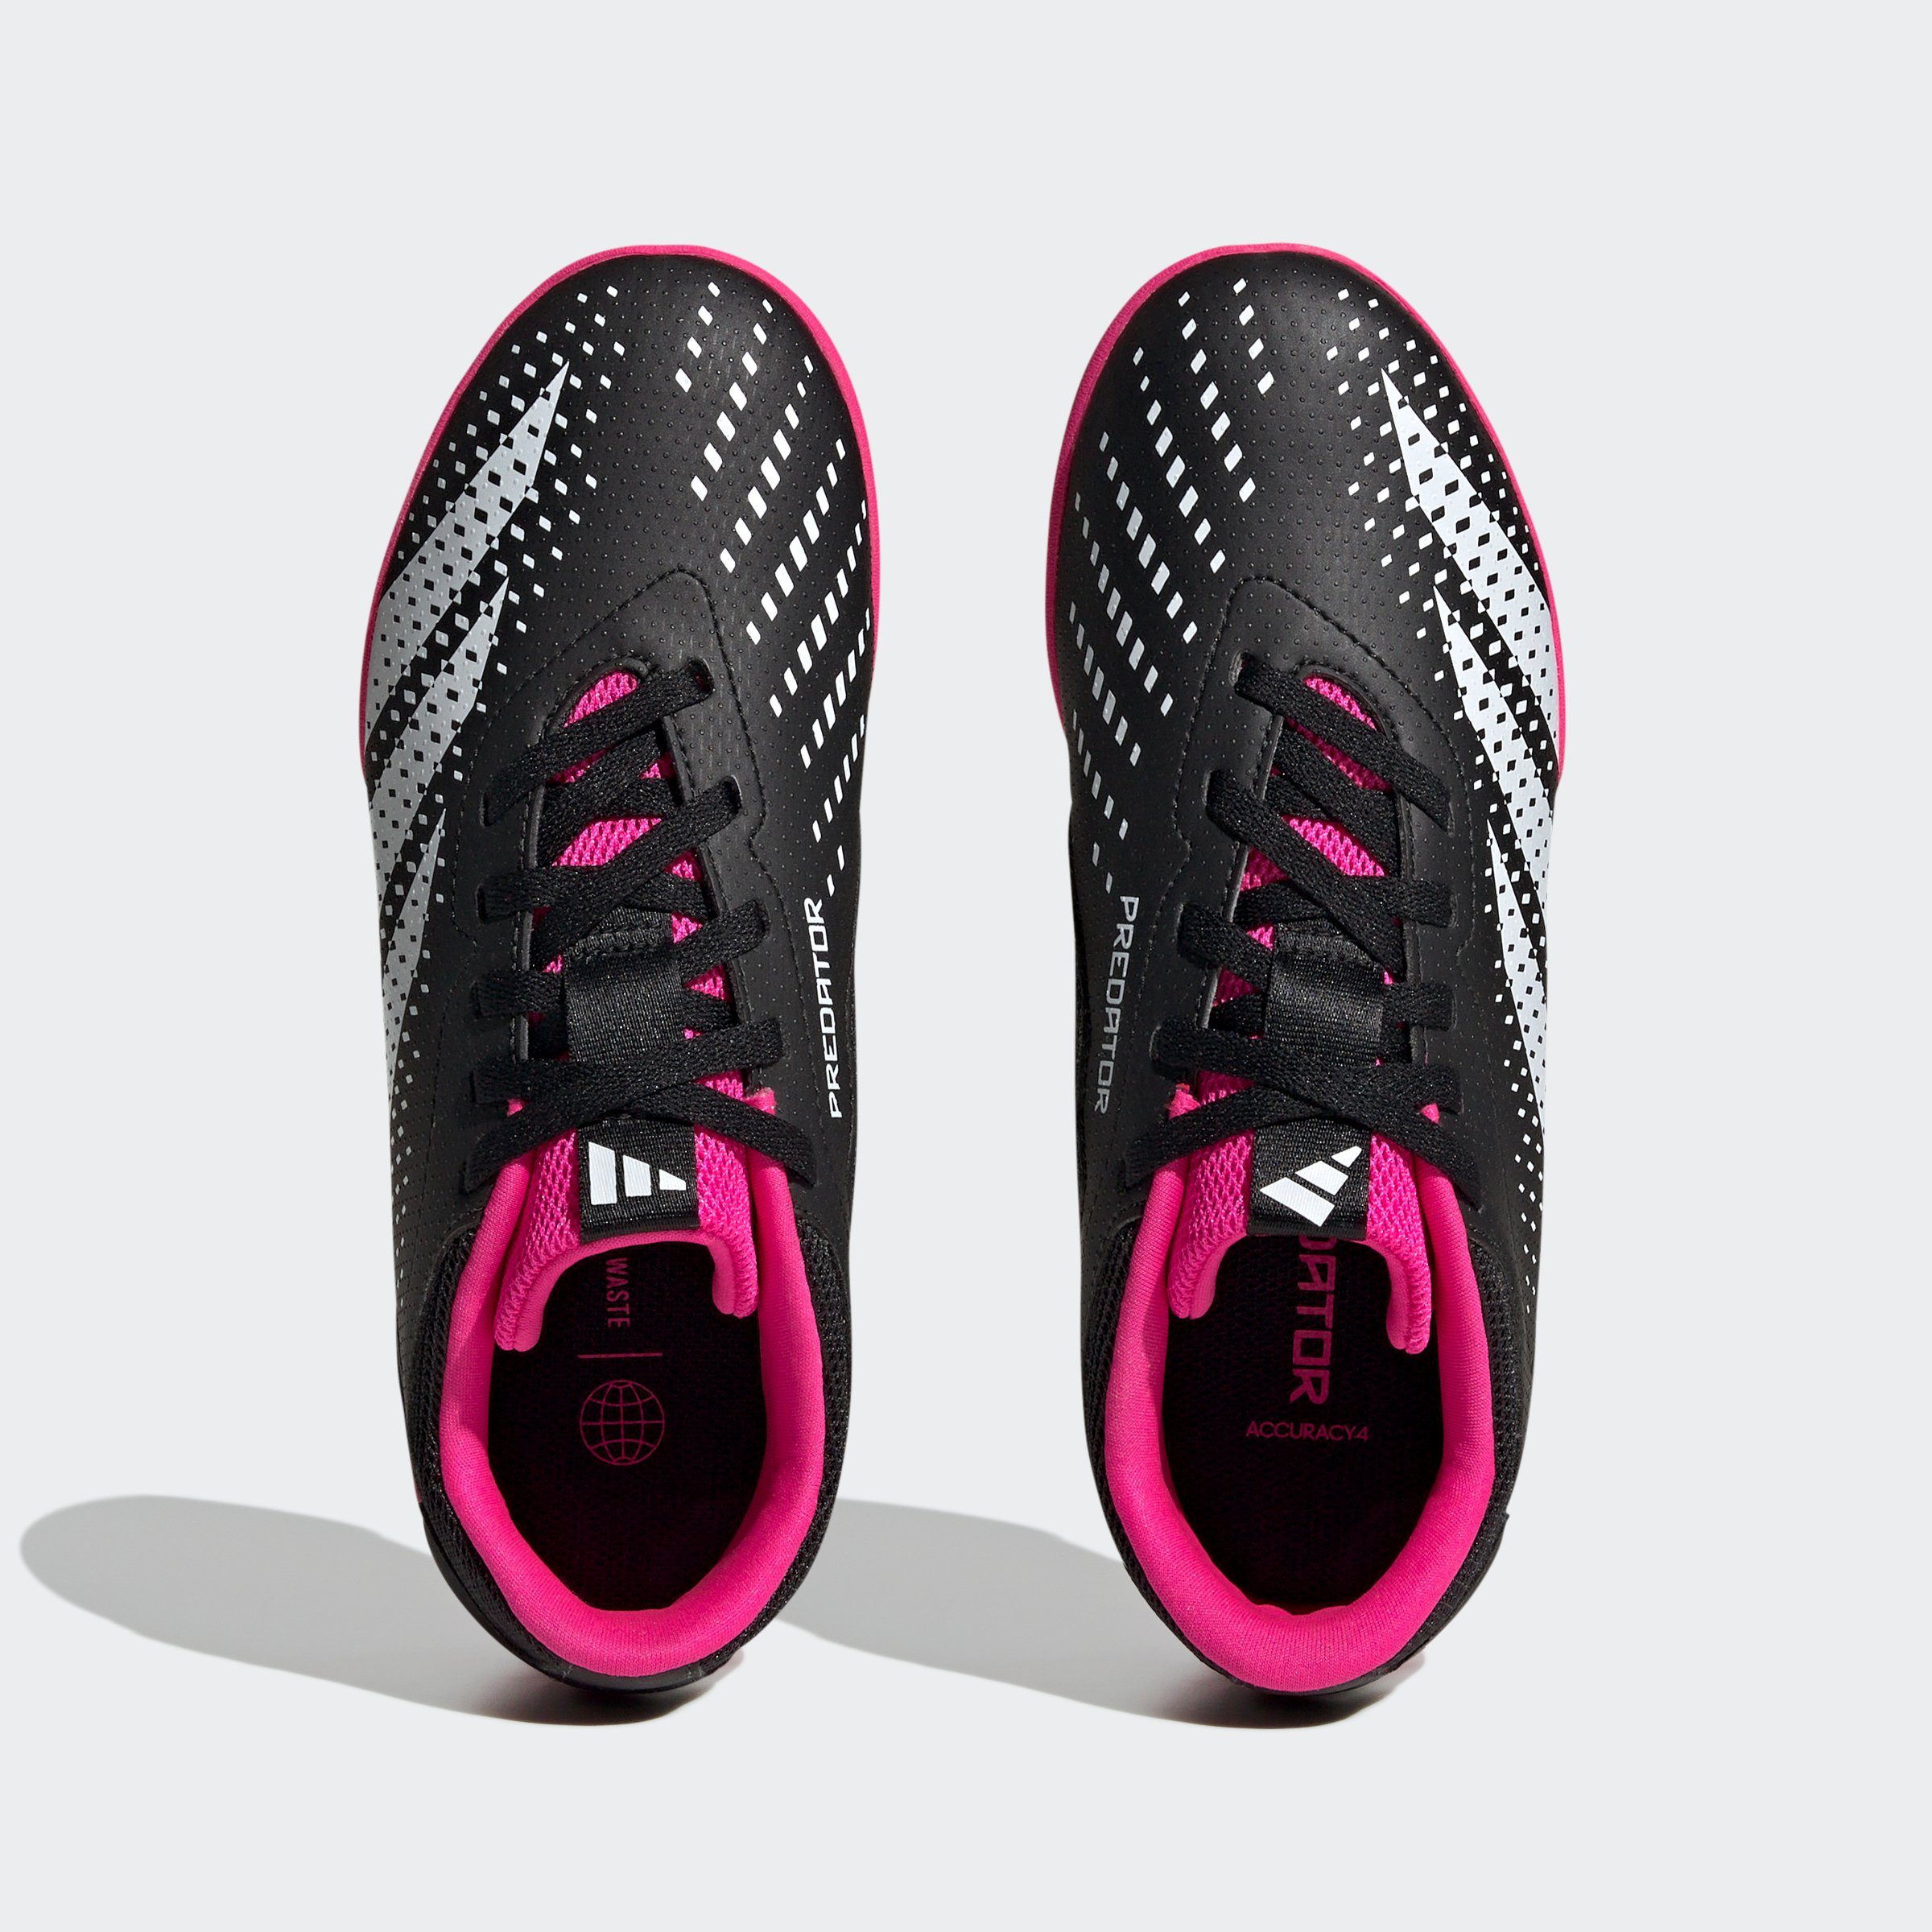 Performance adidas Black Shock Pink Fußballschuh / White Cloud / SALA ACCURACY.4 PREDATOR Team IN Core 2